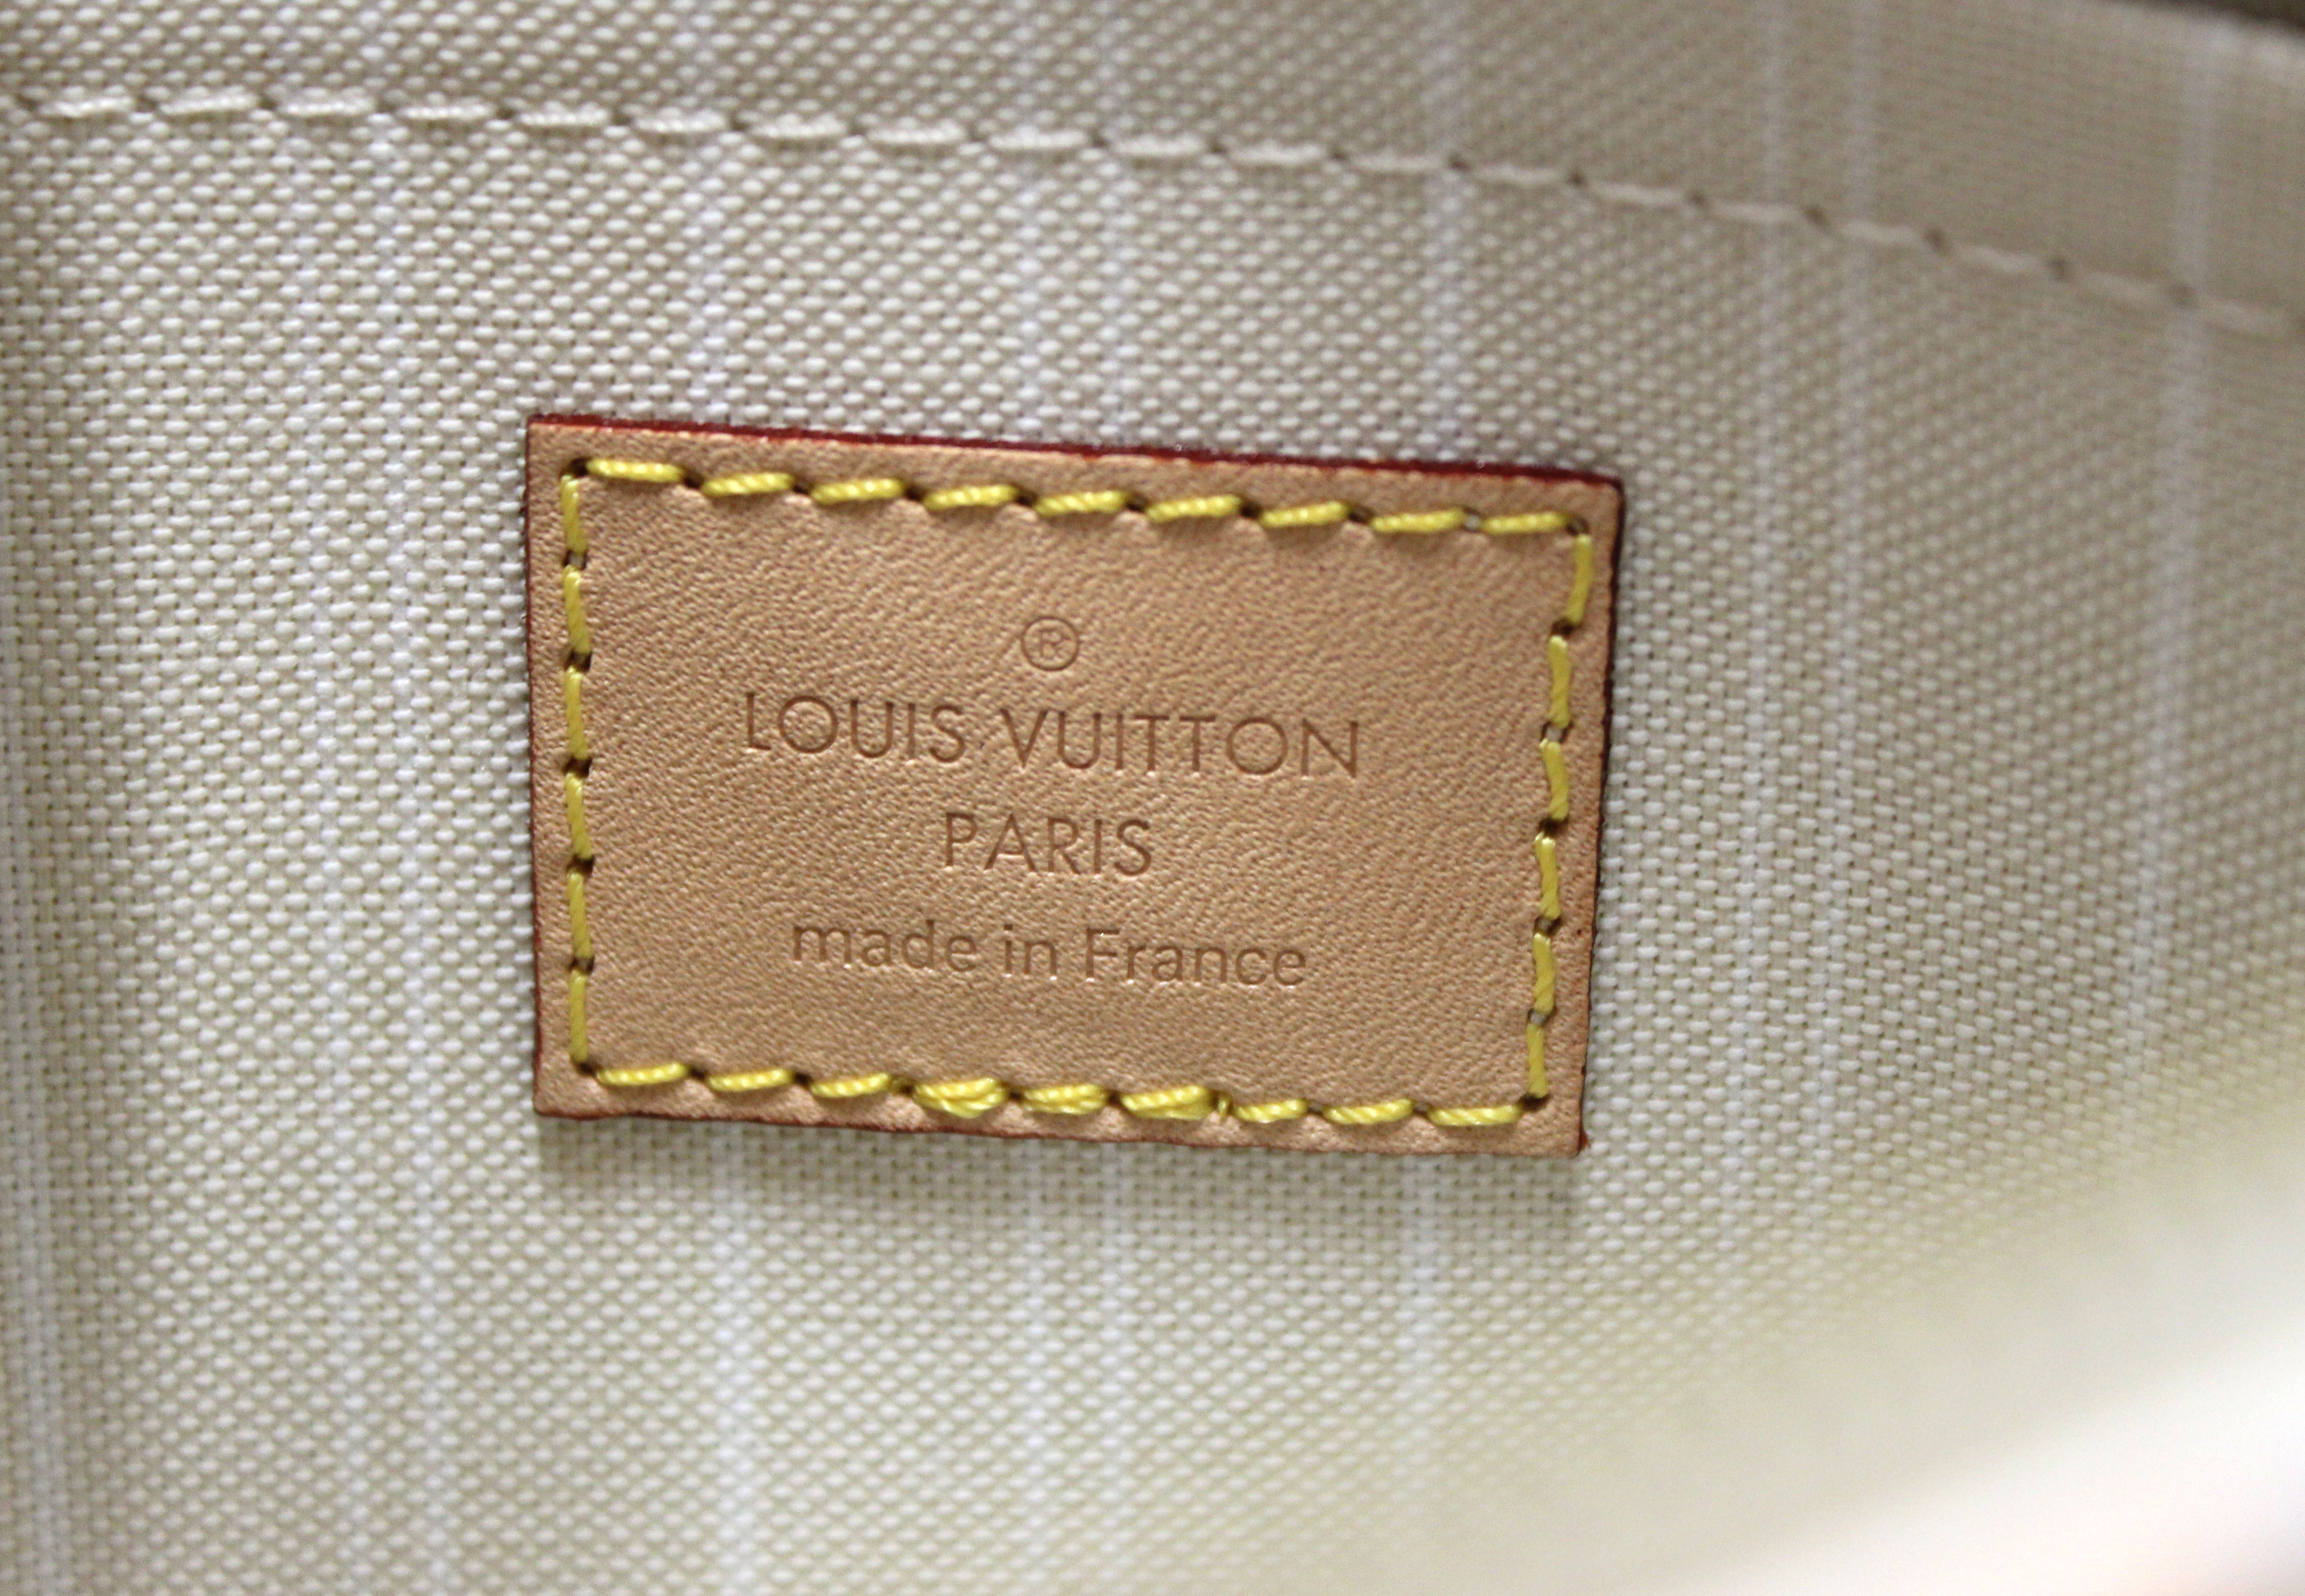 NEW Authentic Louis Vuitton Giant Monogram Summer By the Pool Blue Multi-Pochette Accessoires Bag